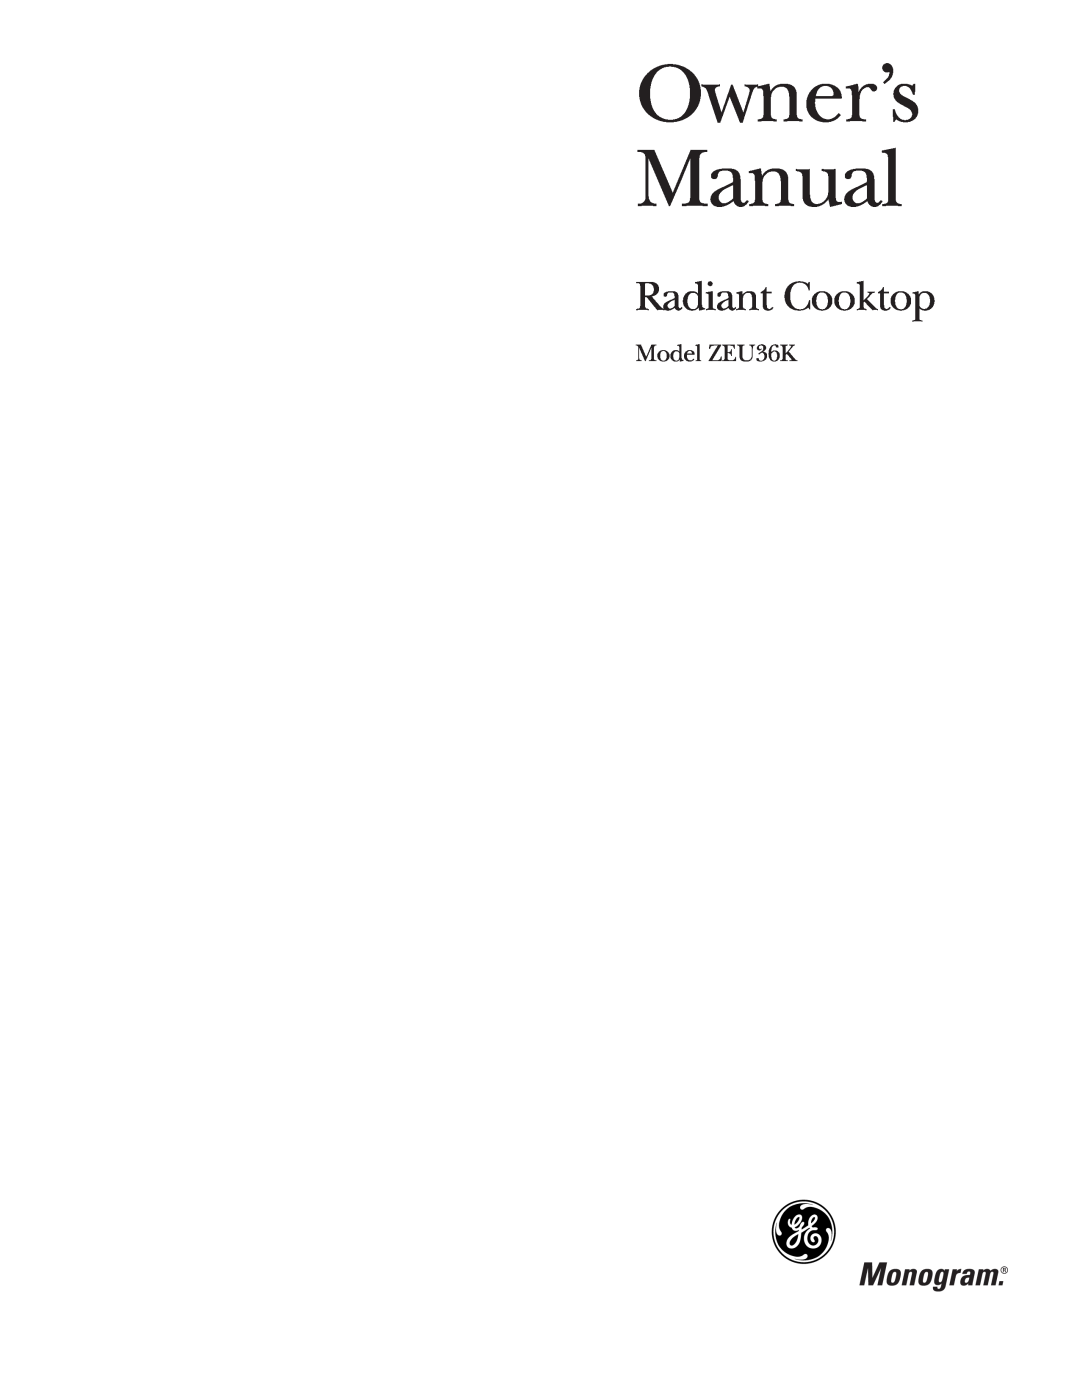 GE Monogram owner manual Model ZEU36K, Owner’s Manual, Radiant Cooktop 